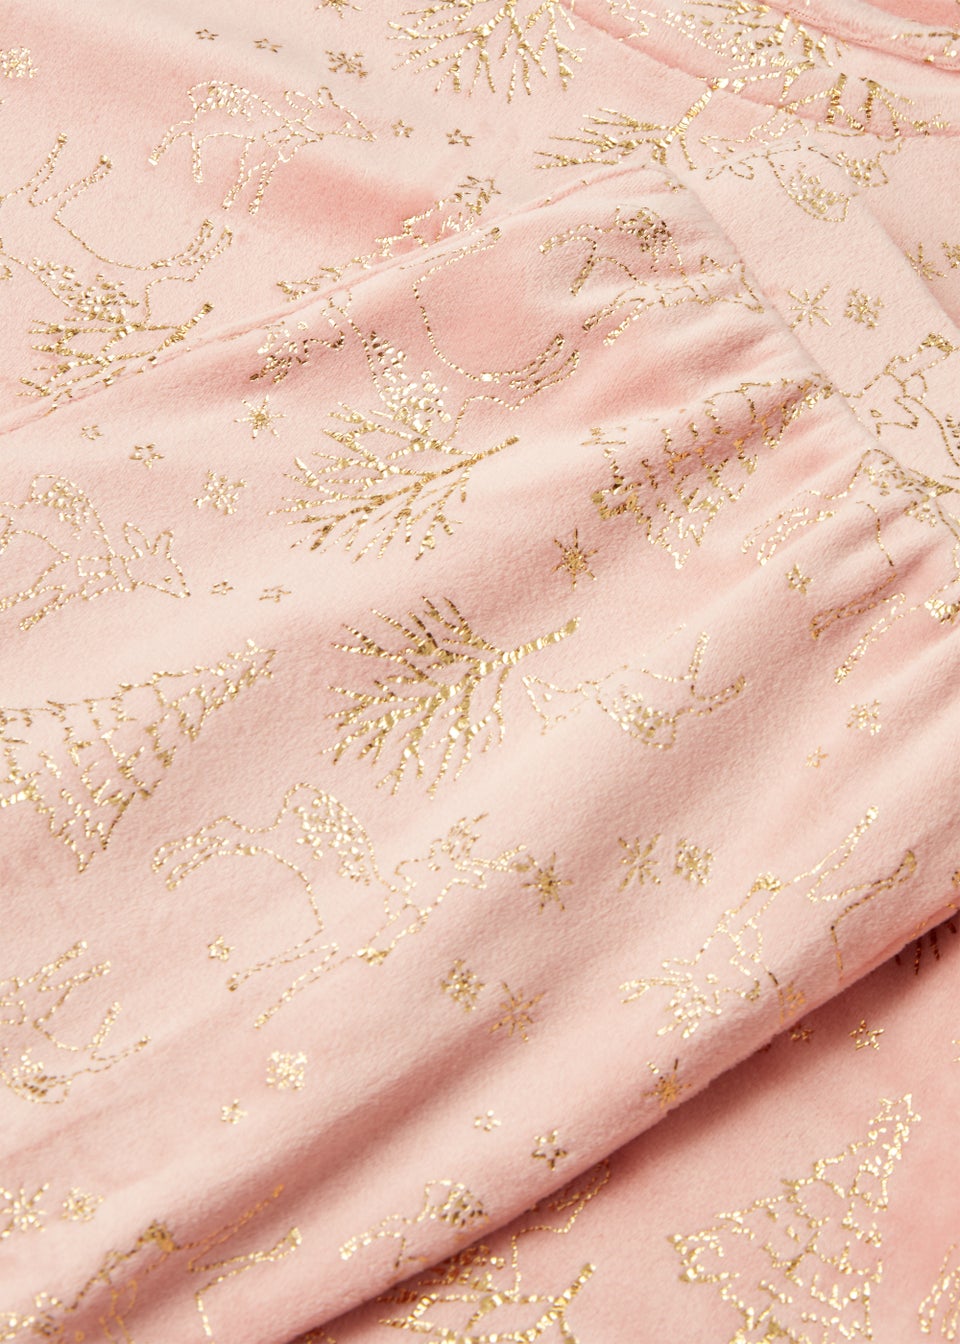 Girls Pink Velour Foil Deer Pyjama Set (4-13yrs)